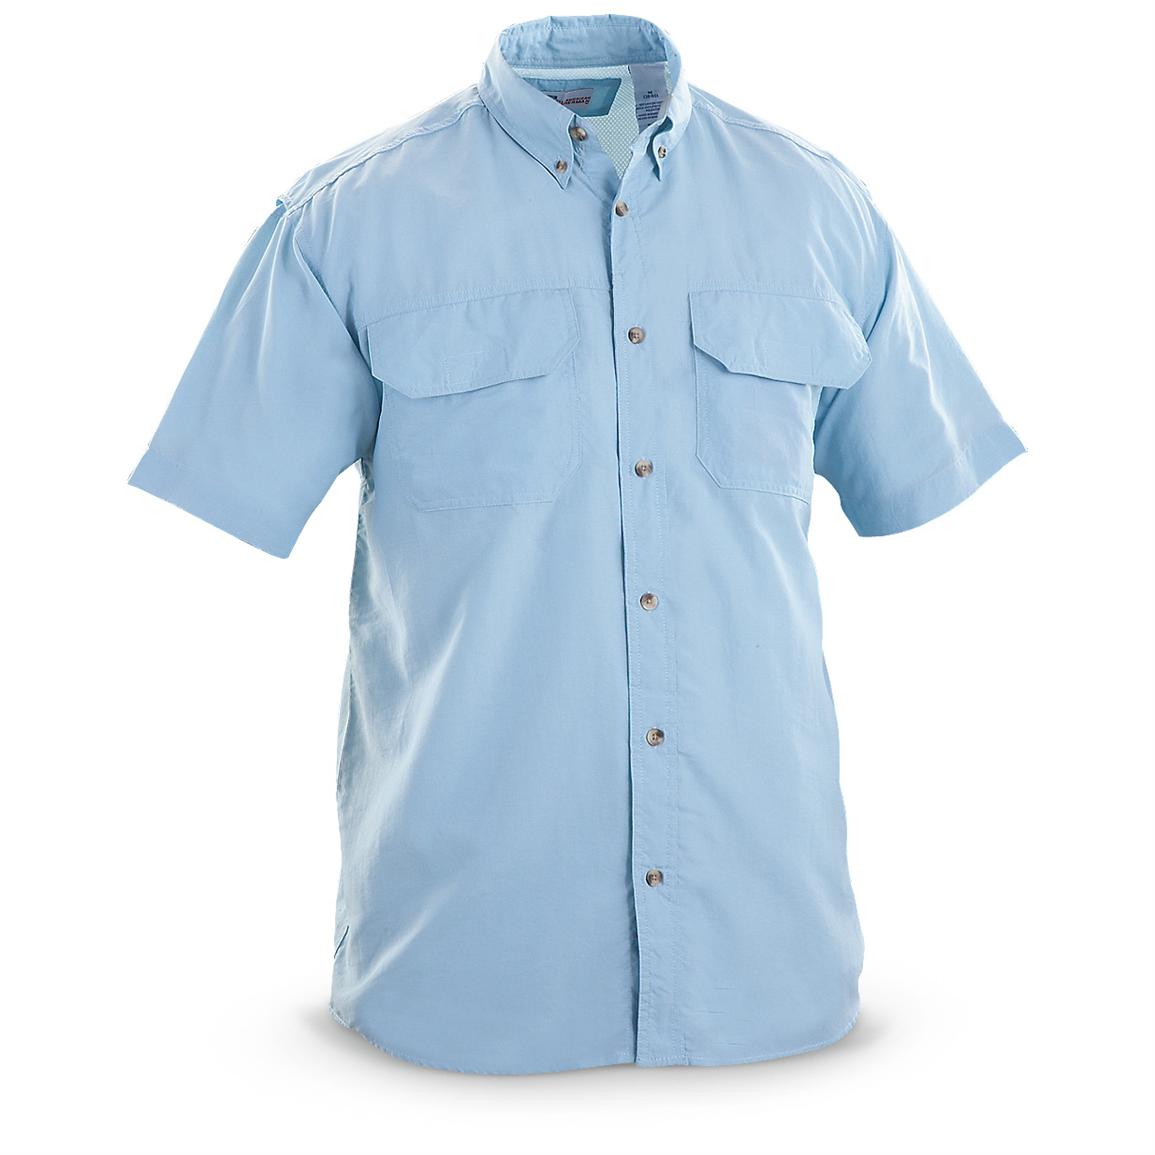 2 All - American Fisherman® Short - sleeved Shirts, 1 Sage / 1 Light ...